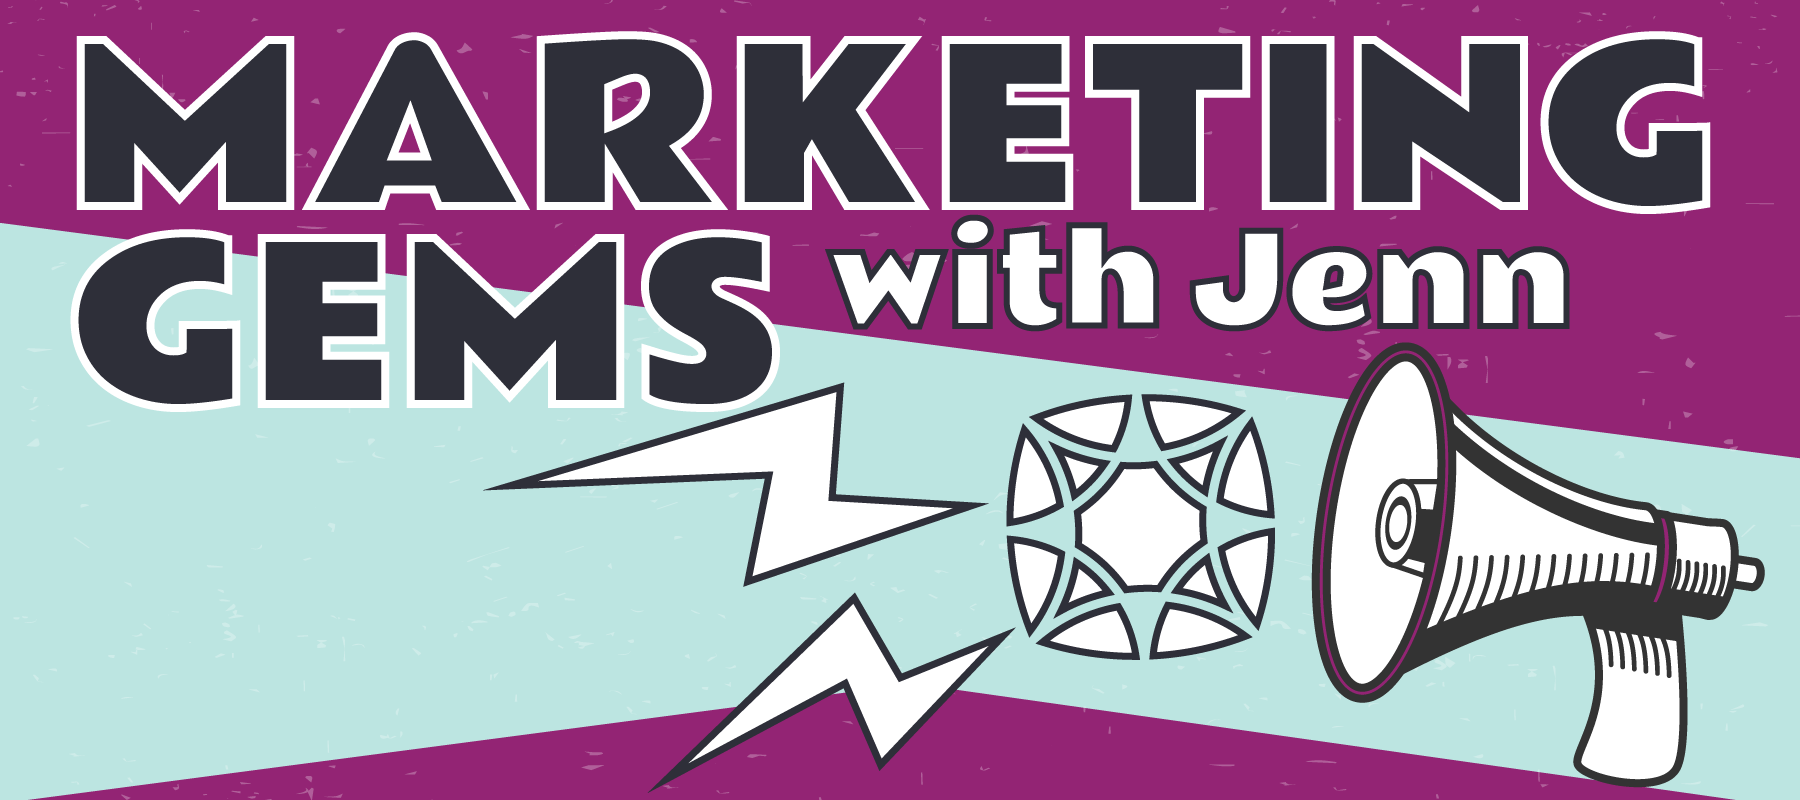 Marketing Gems with Jenn header image.